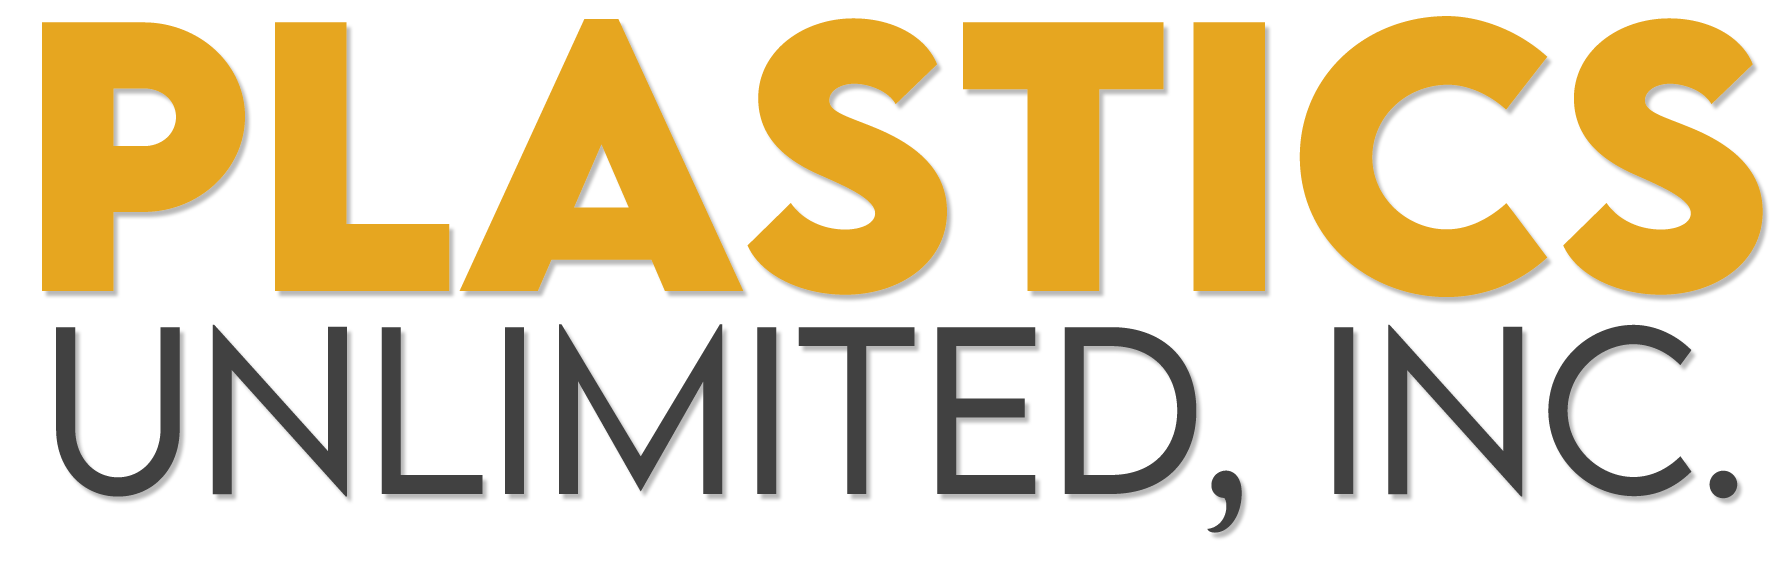 Plastics Unlimited Inc logo